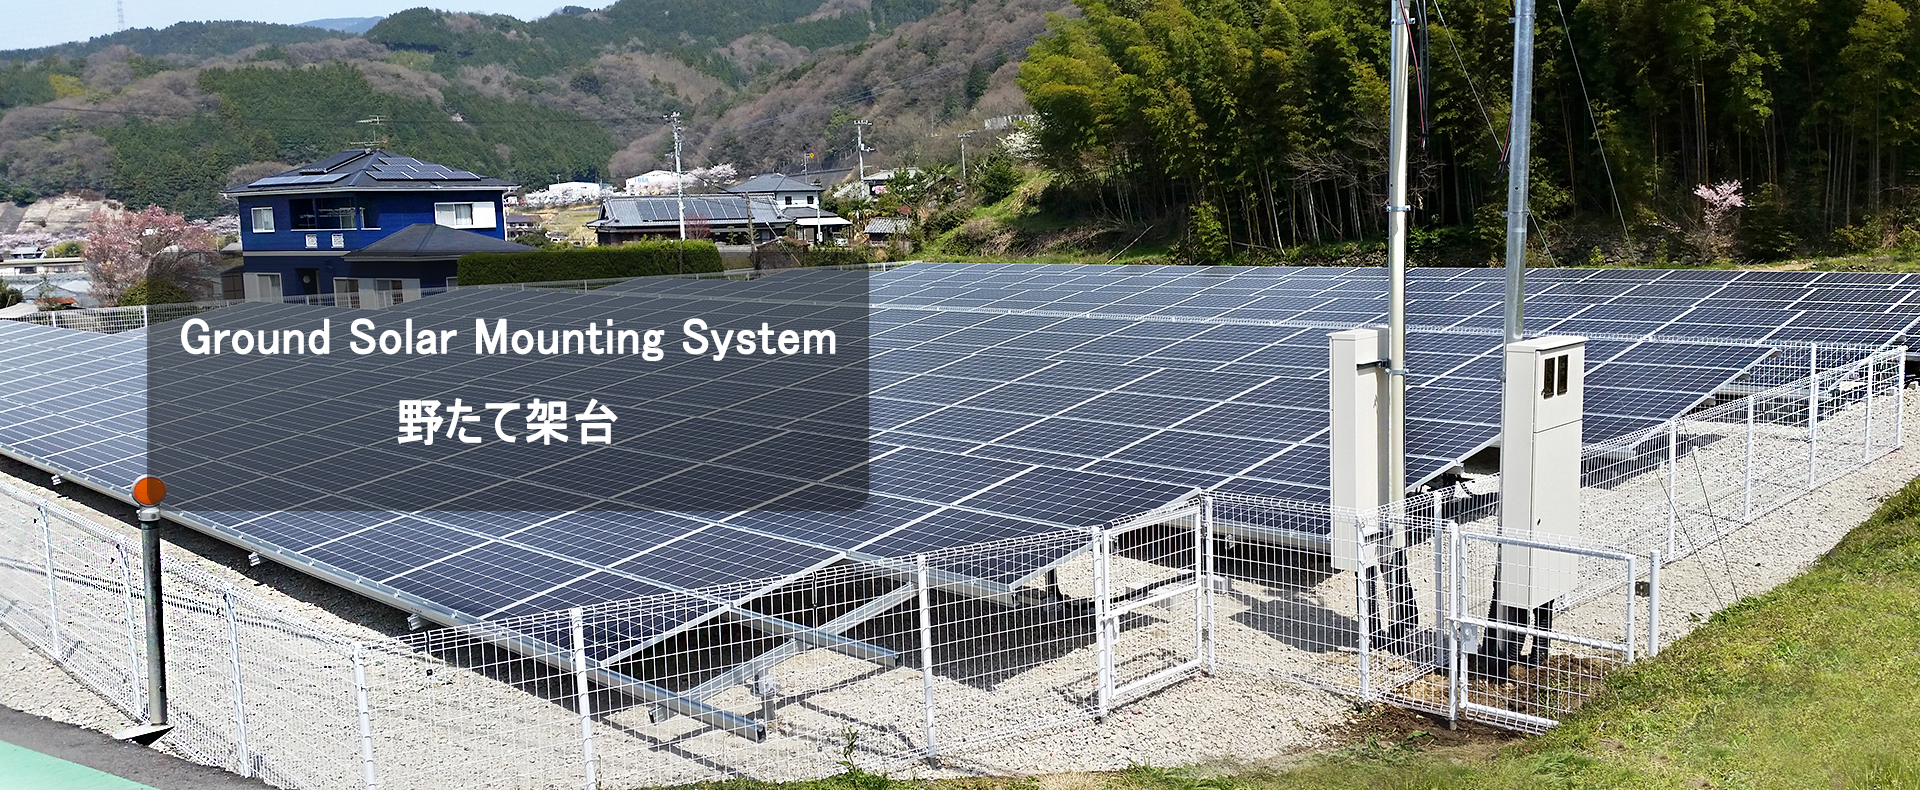 Supply aluminium rail for solar panel mounting Wholesale Factory